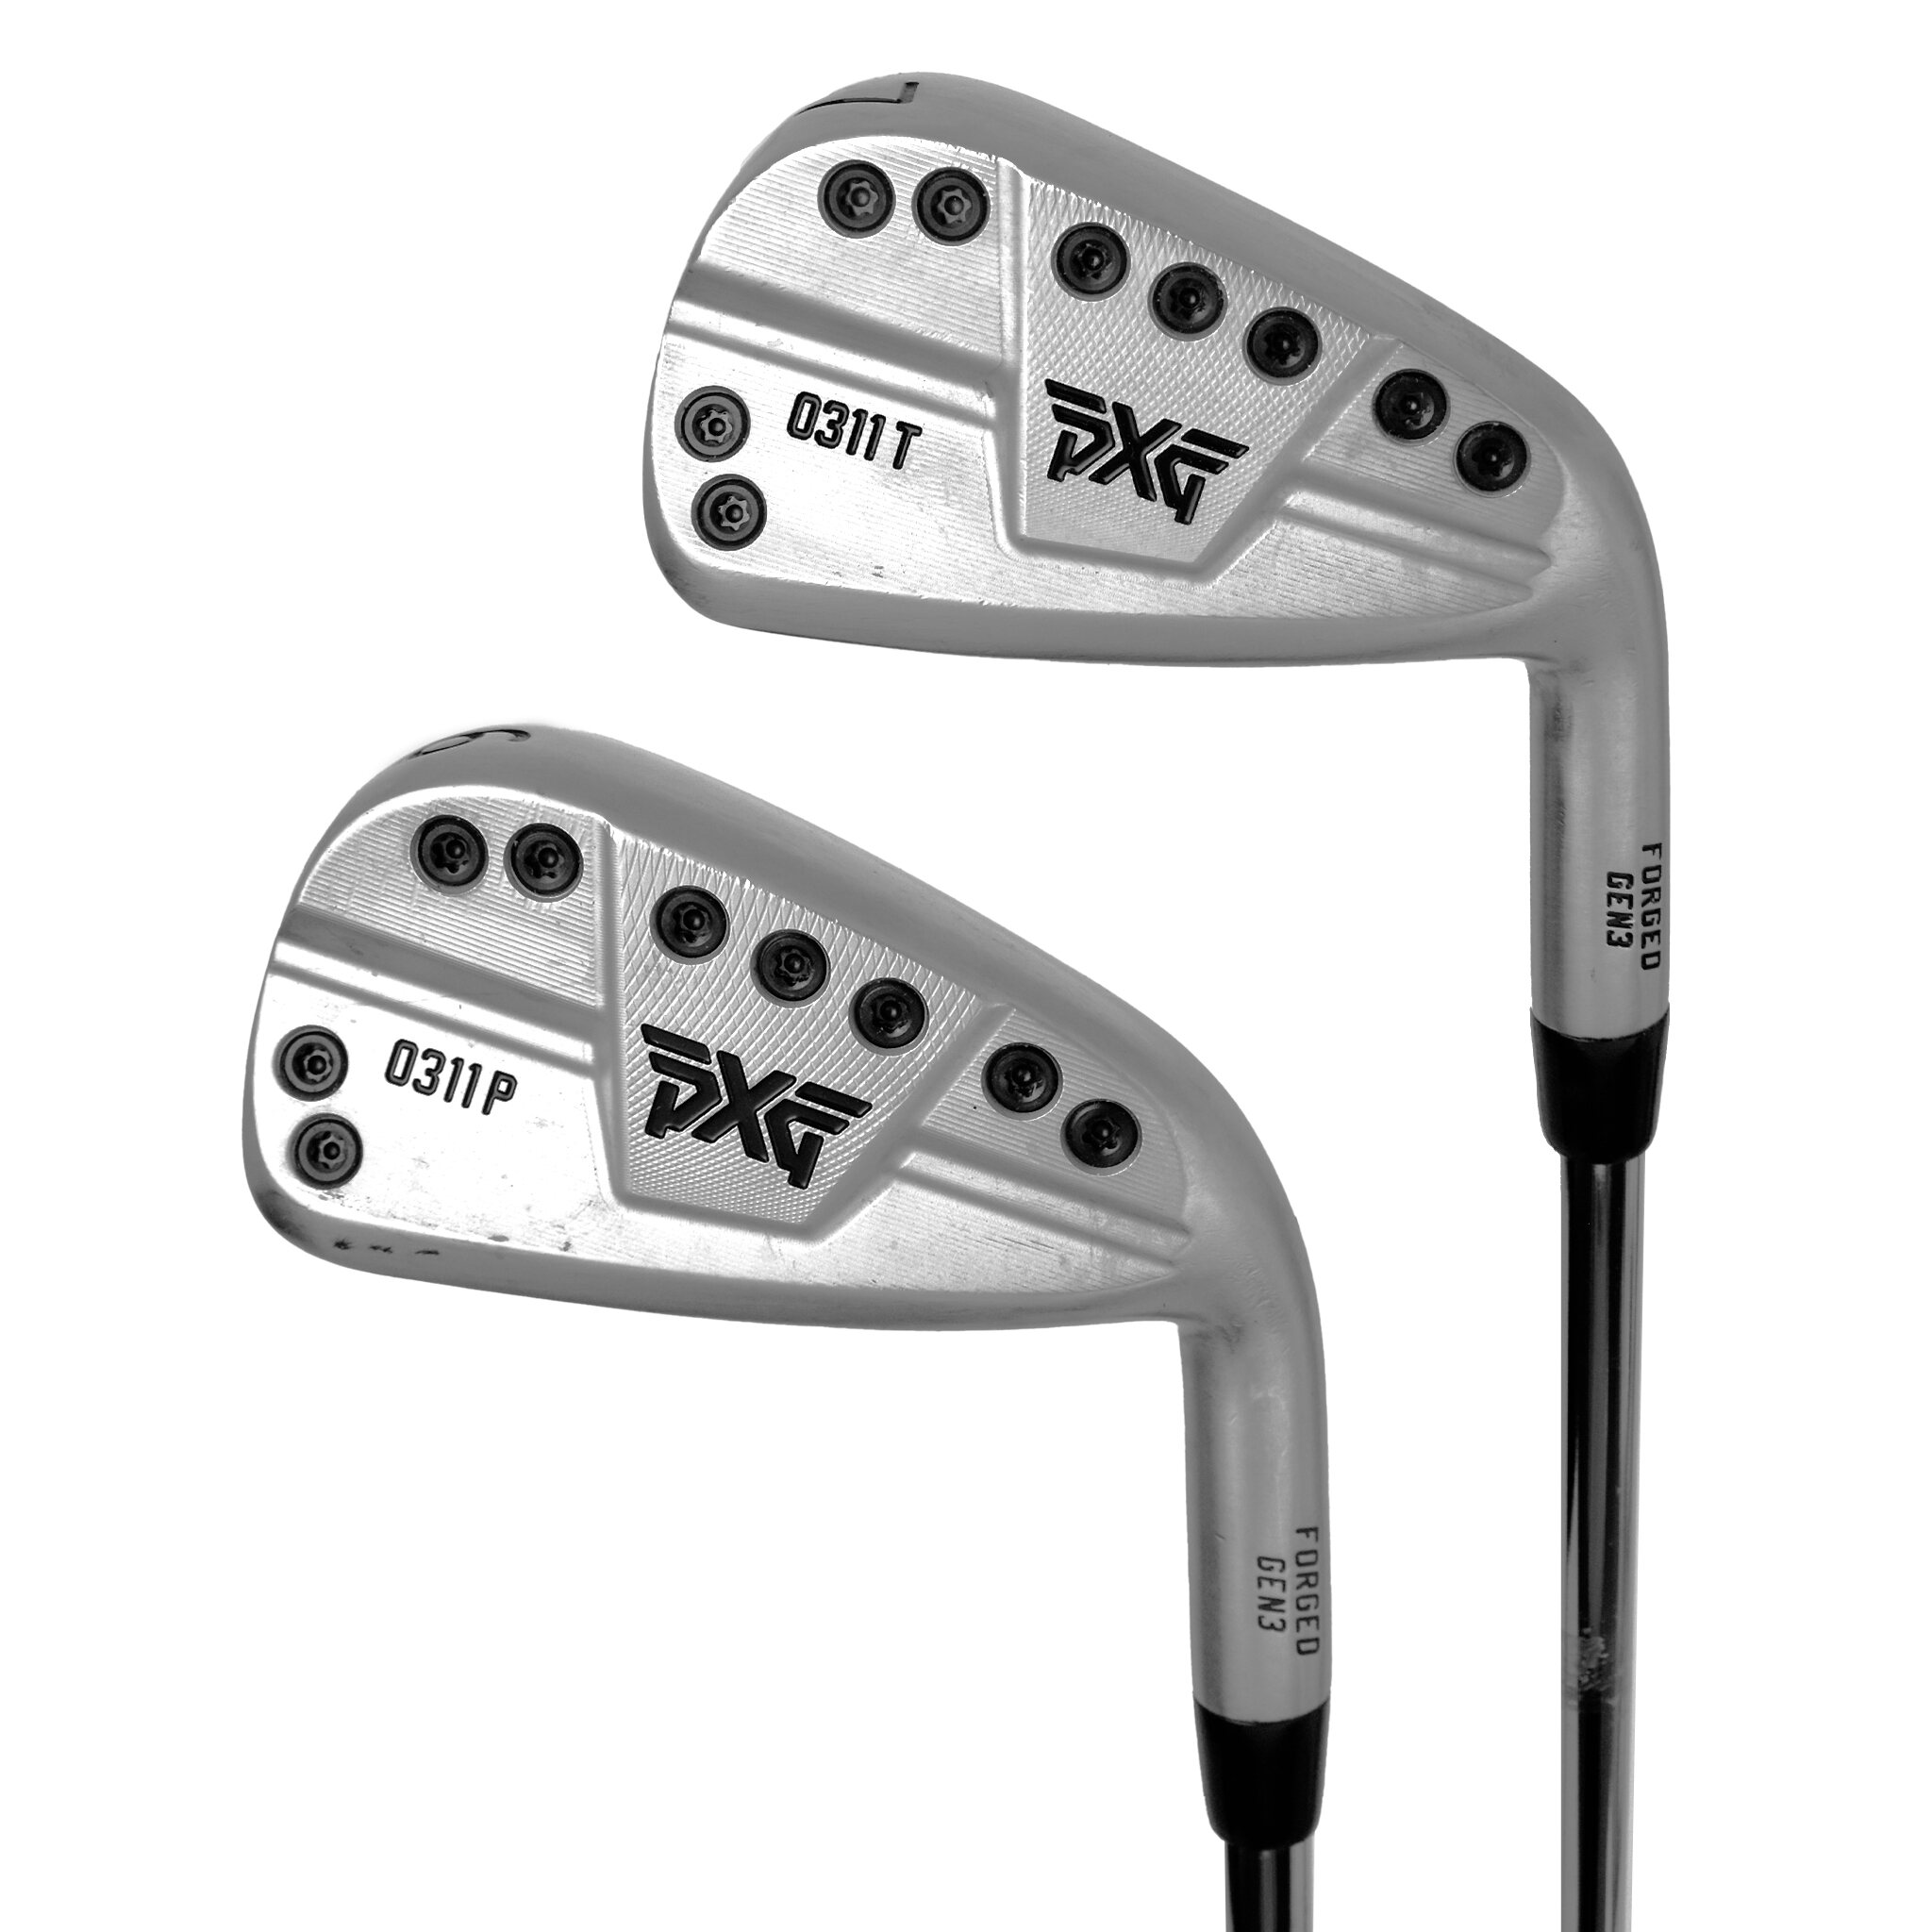 Pre-Owned PXG Golf O311 P Gen 3 Irons (9 Iron Set) | RockBottomGolf.com